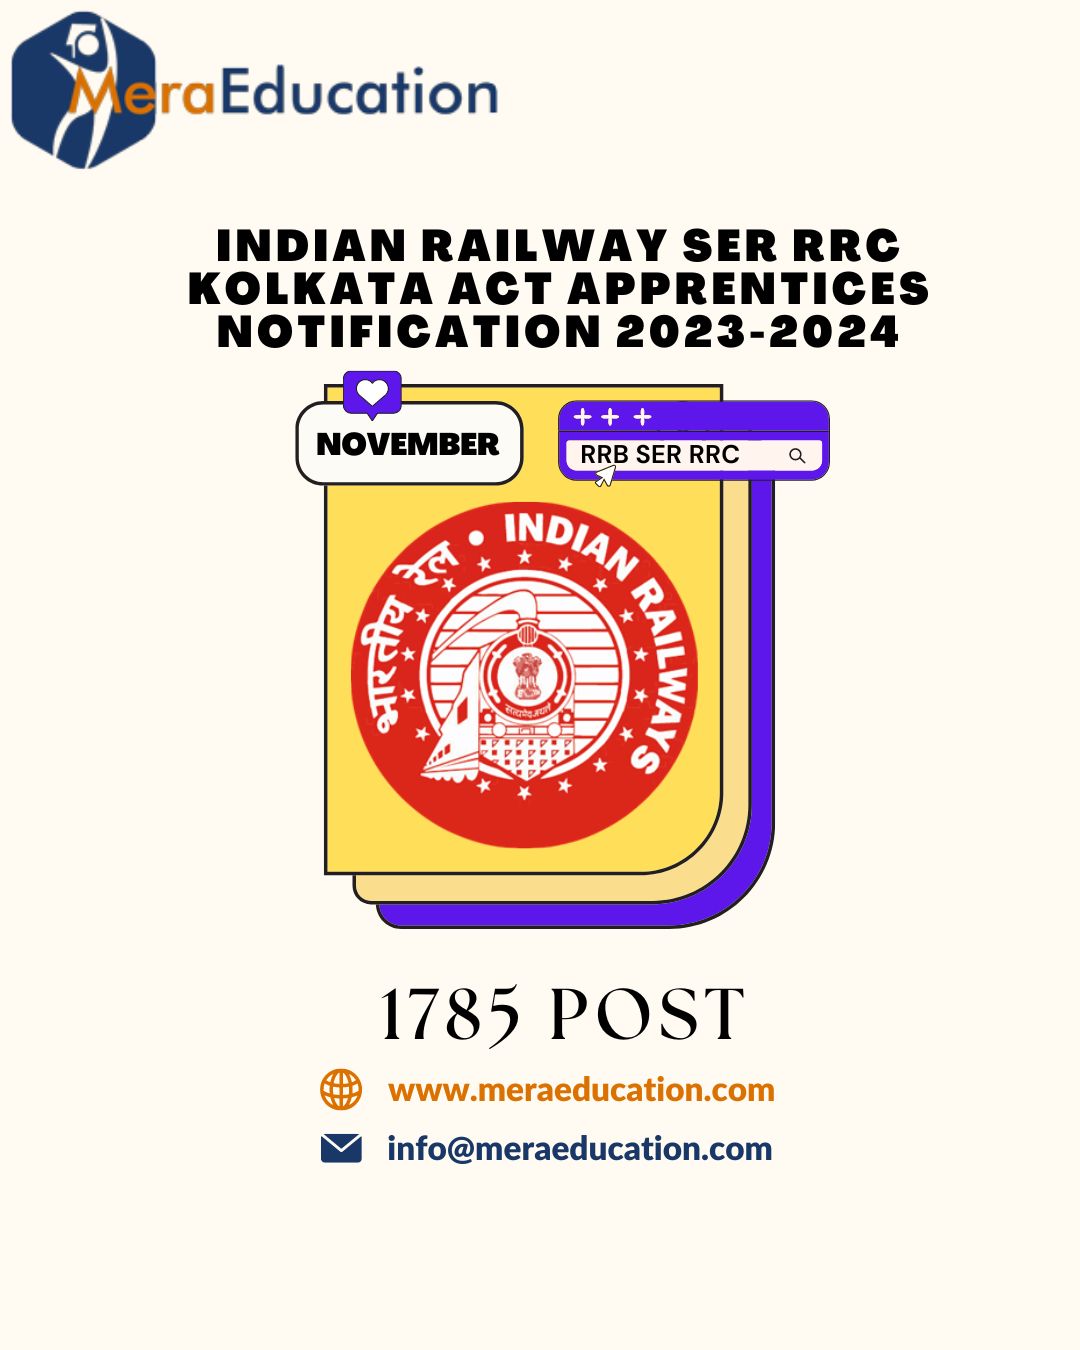 Indian Railway SER RRC Kolkata Act Apprentices